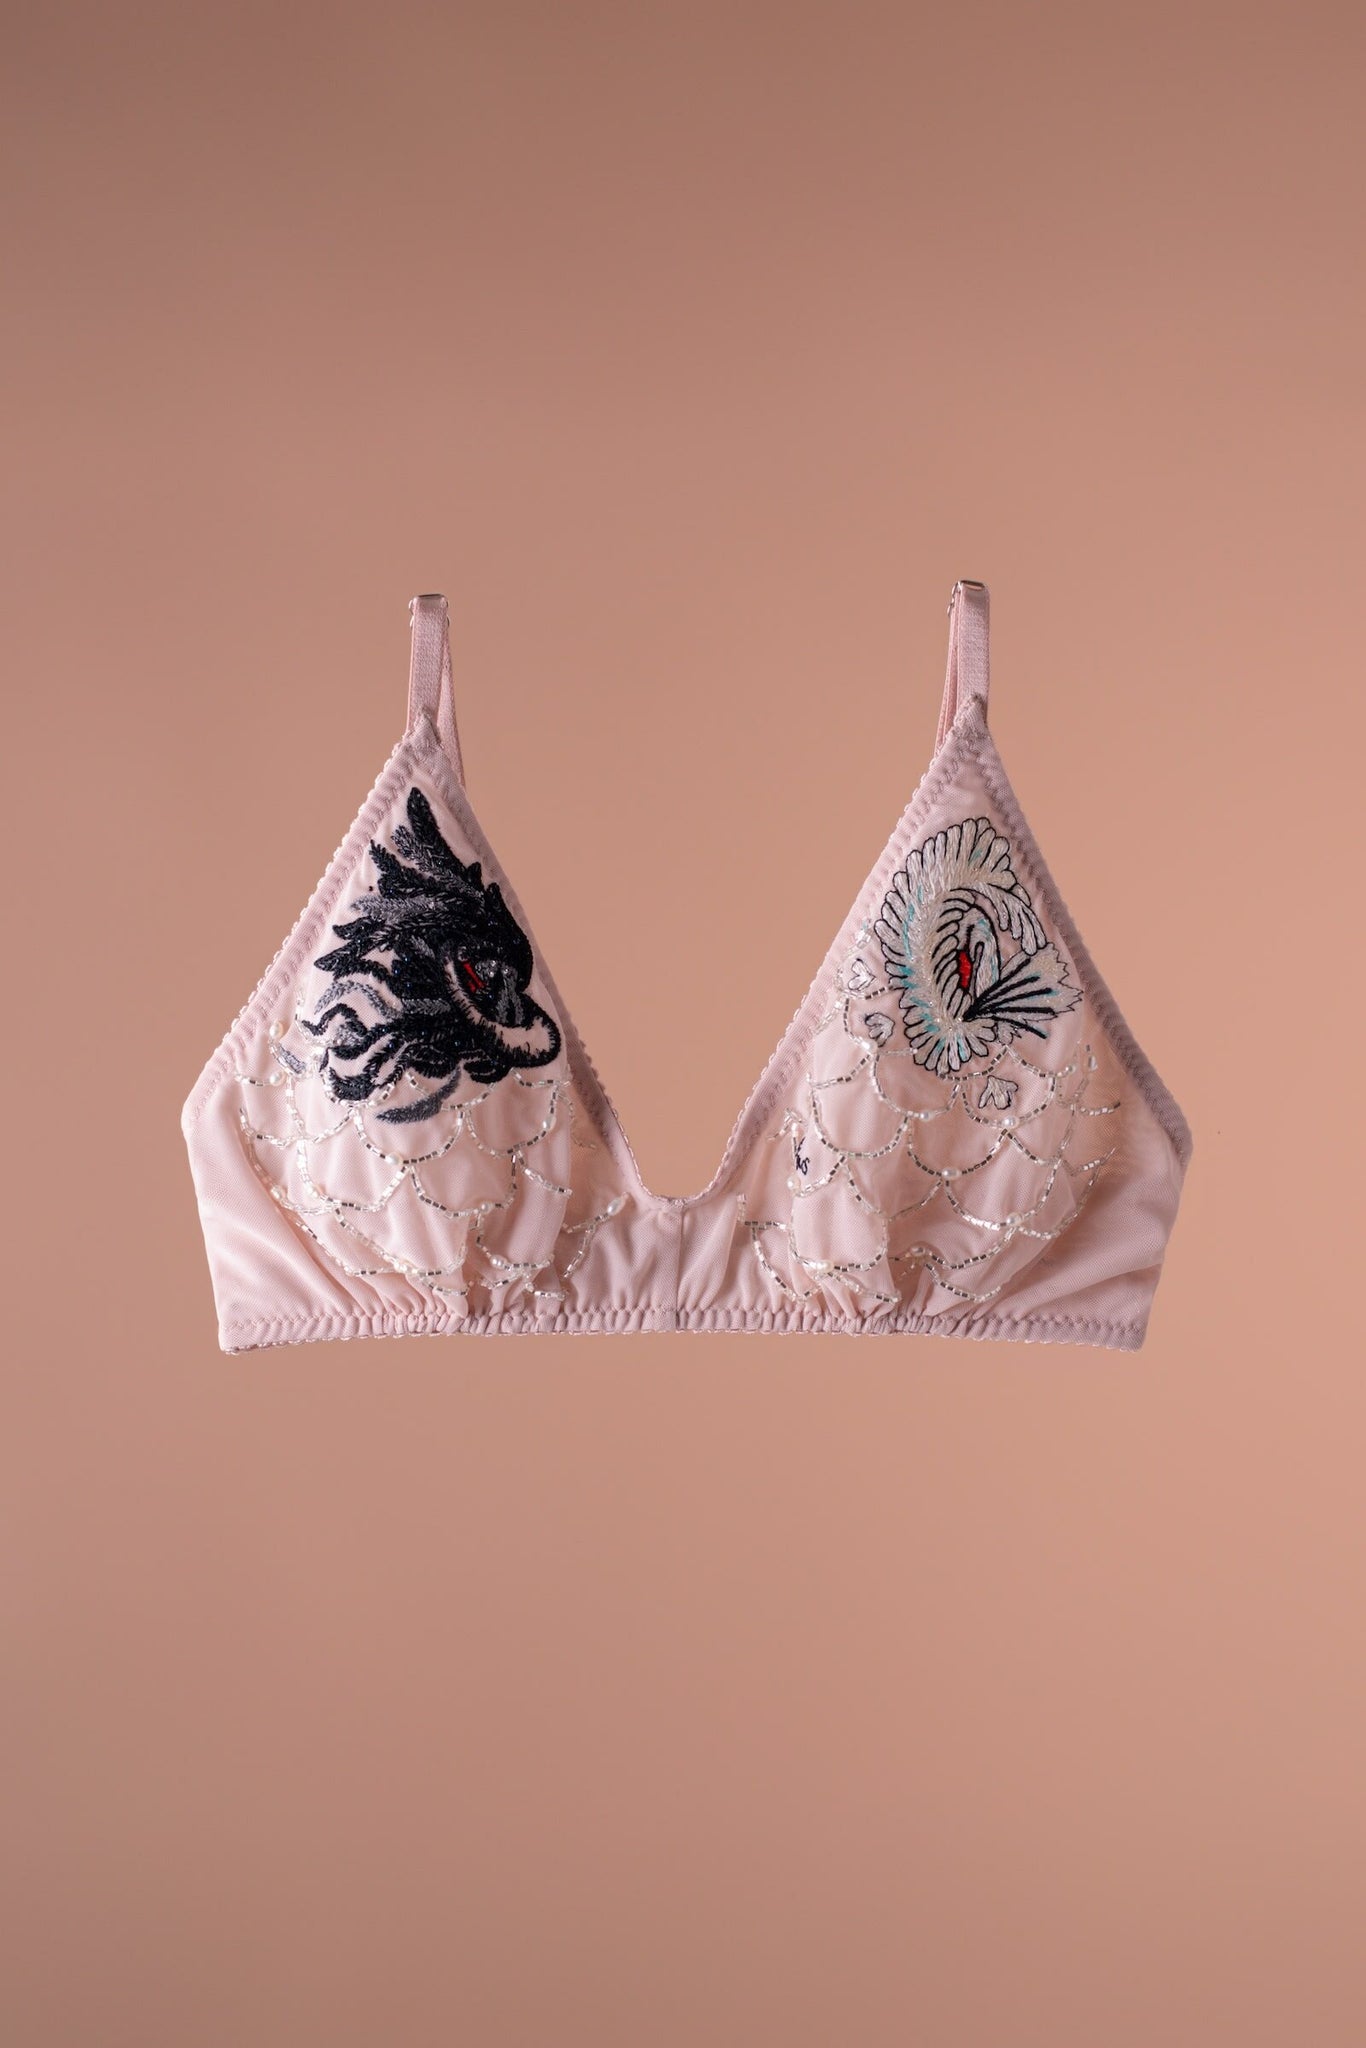 10 creative and unusual bra designs - Design Swan